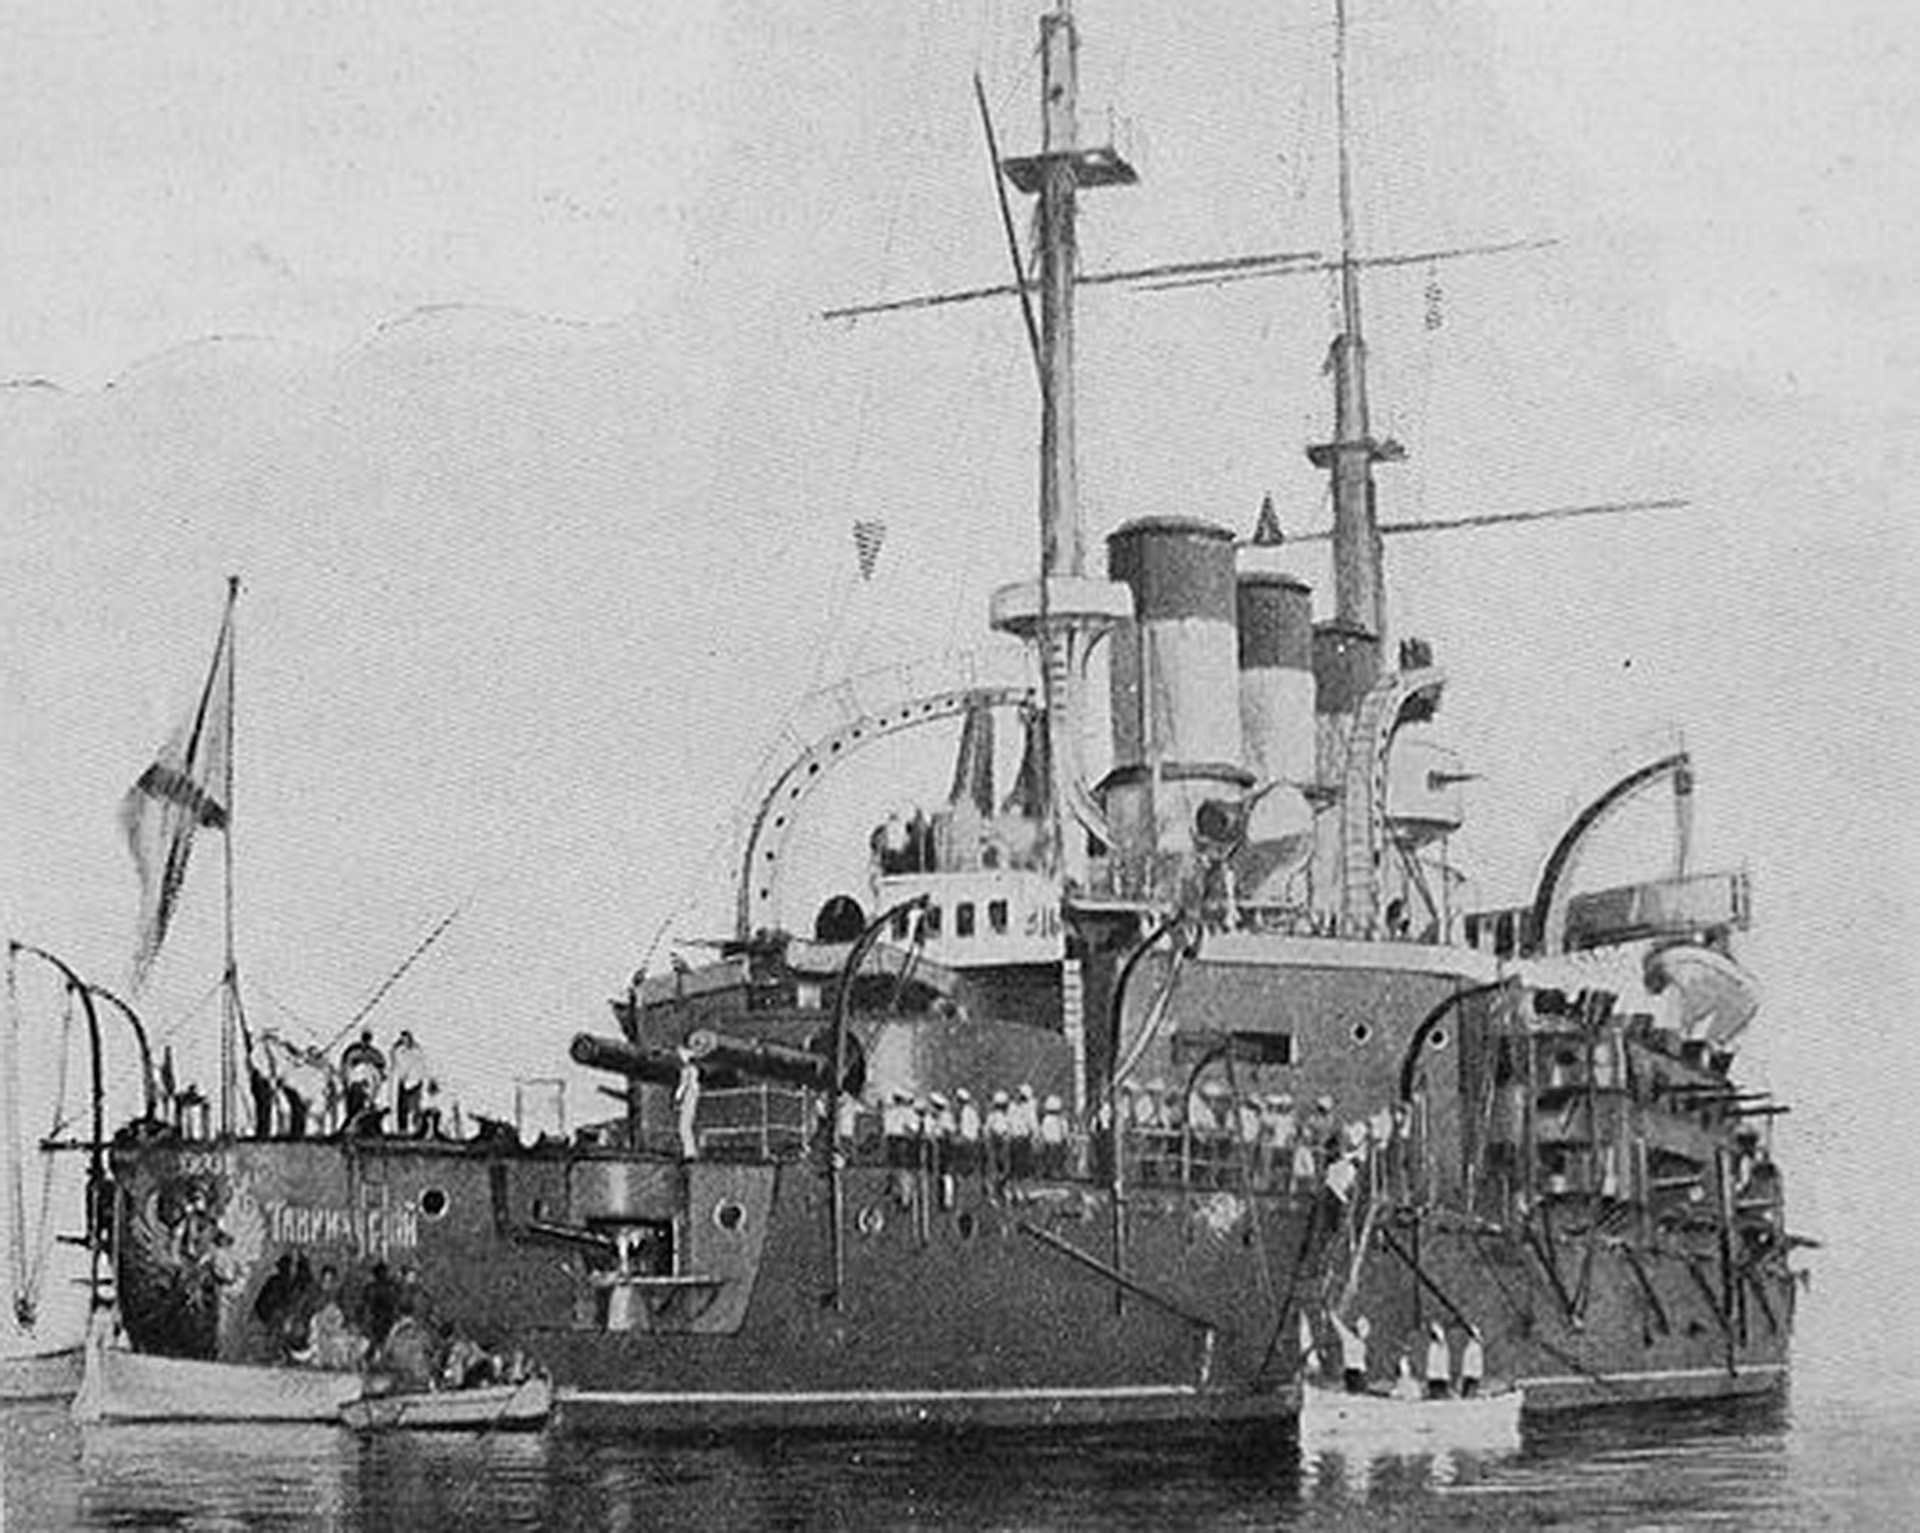 The battleship Potemkin at Constanta port in July 1905.

